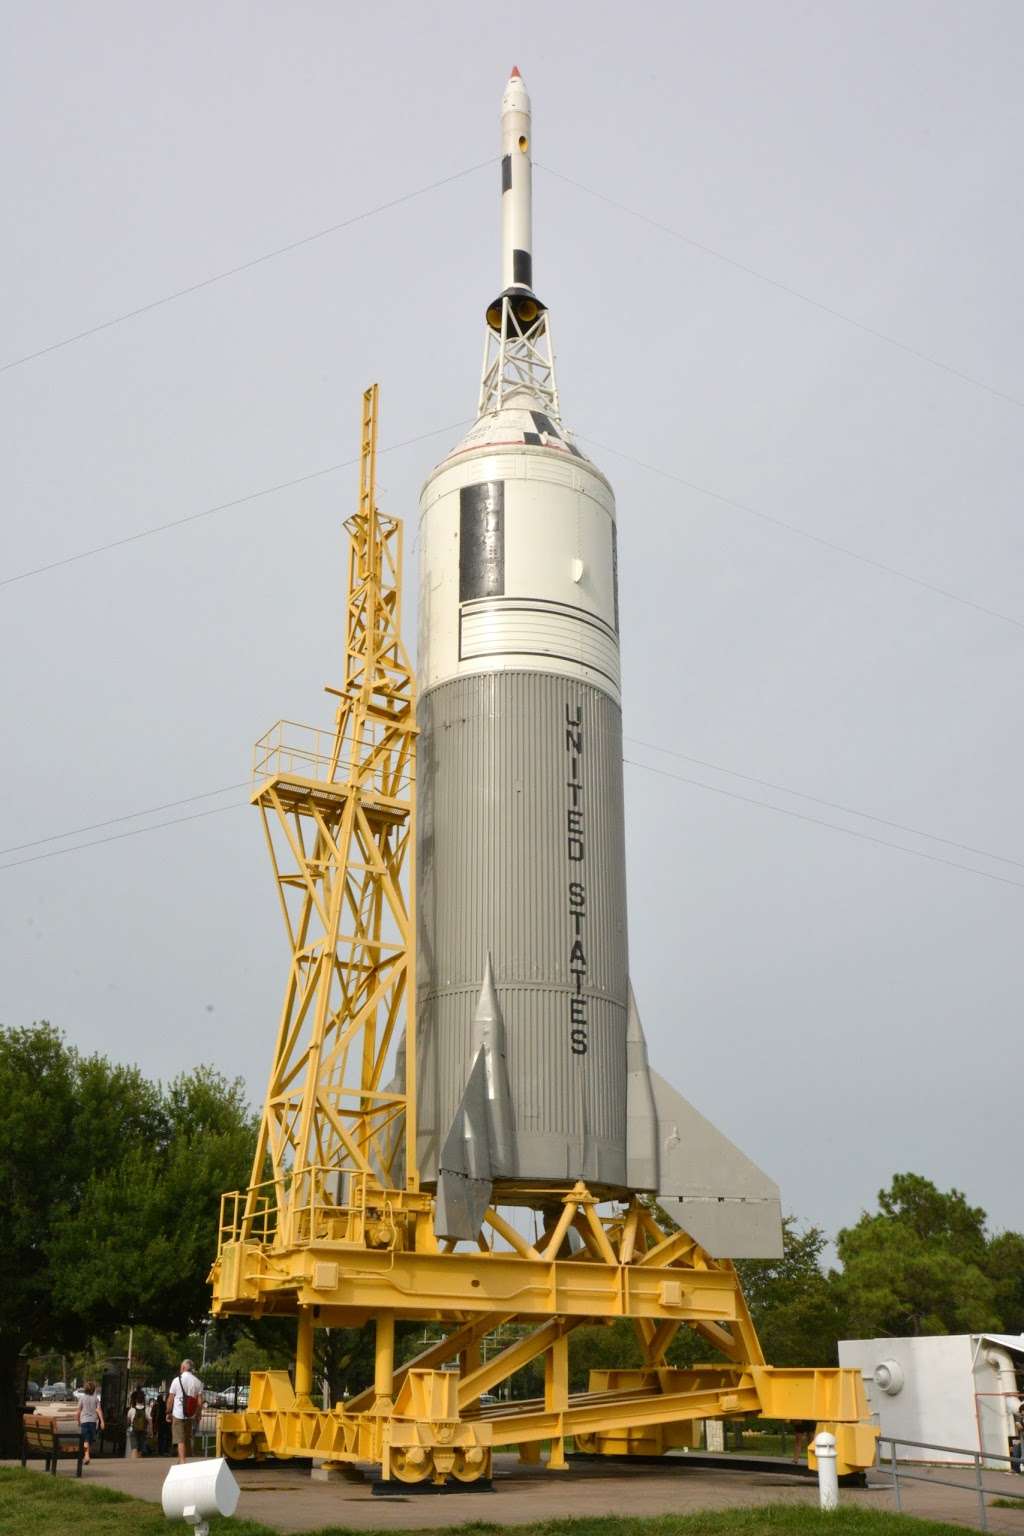 Rocket Park | 1601 NASA Road 1, Houston, TX 77058 | Phone: (281) 244-2100